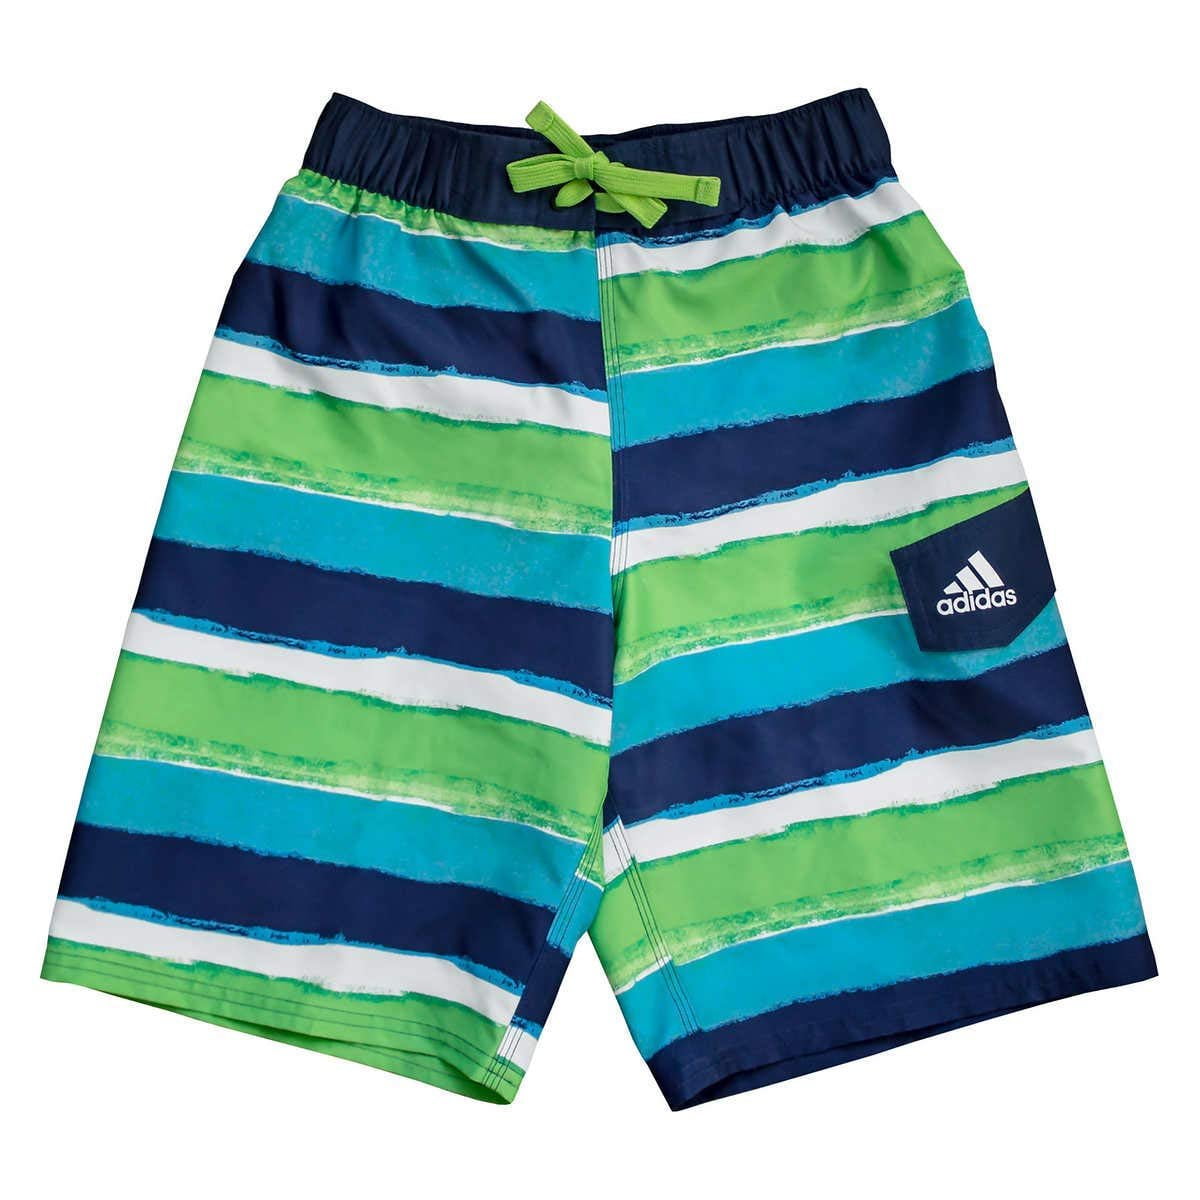 adidas Boys Boardshorts (Small, Stripes) - Walmart.com